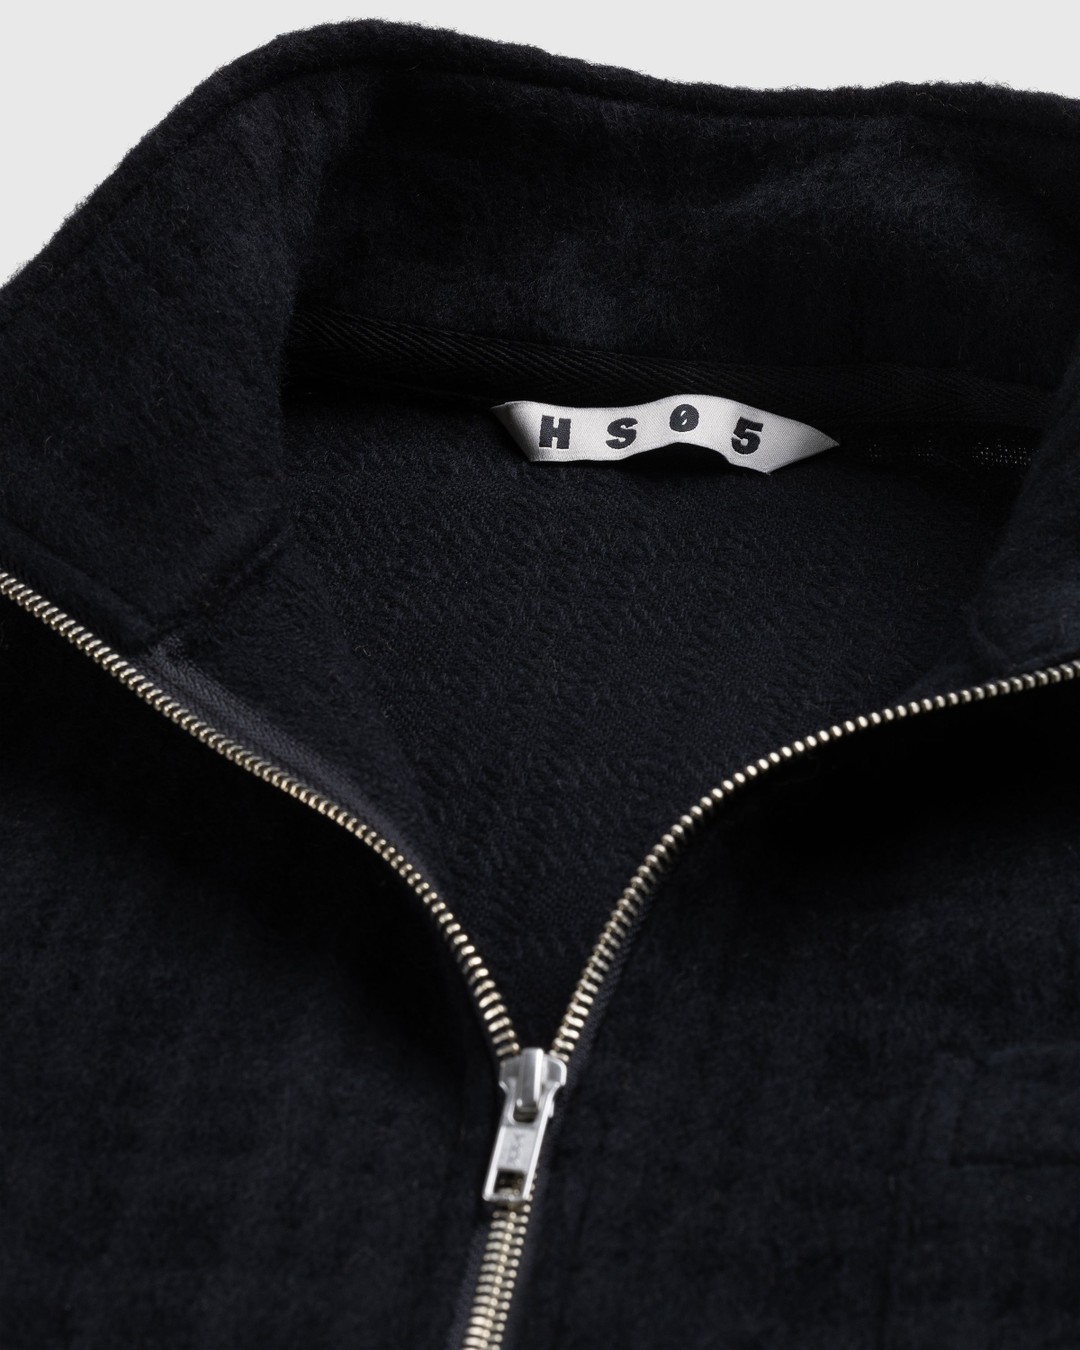 Highsnobiety HS05 – Recycled Half-Zip Wool Fleece Black - Knitwear - Black - Image 6